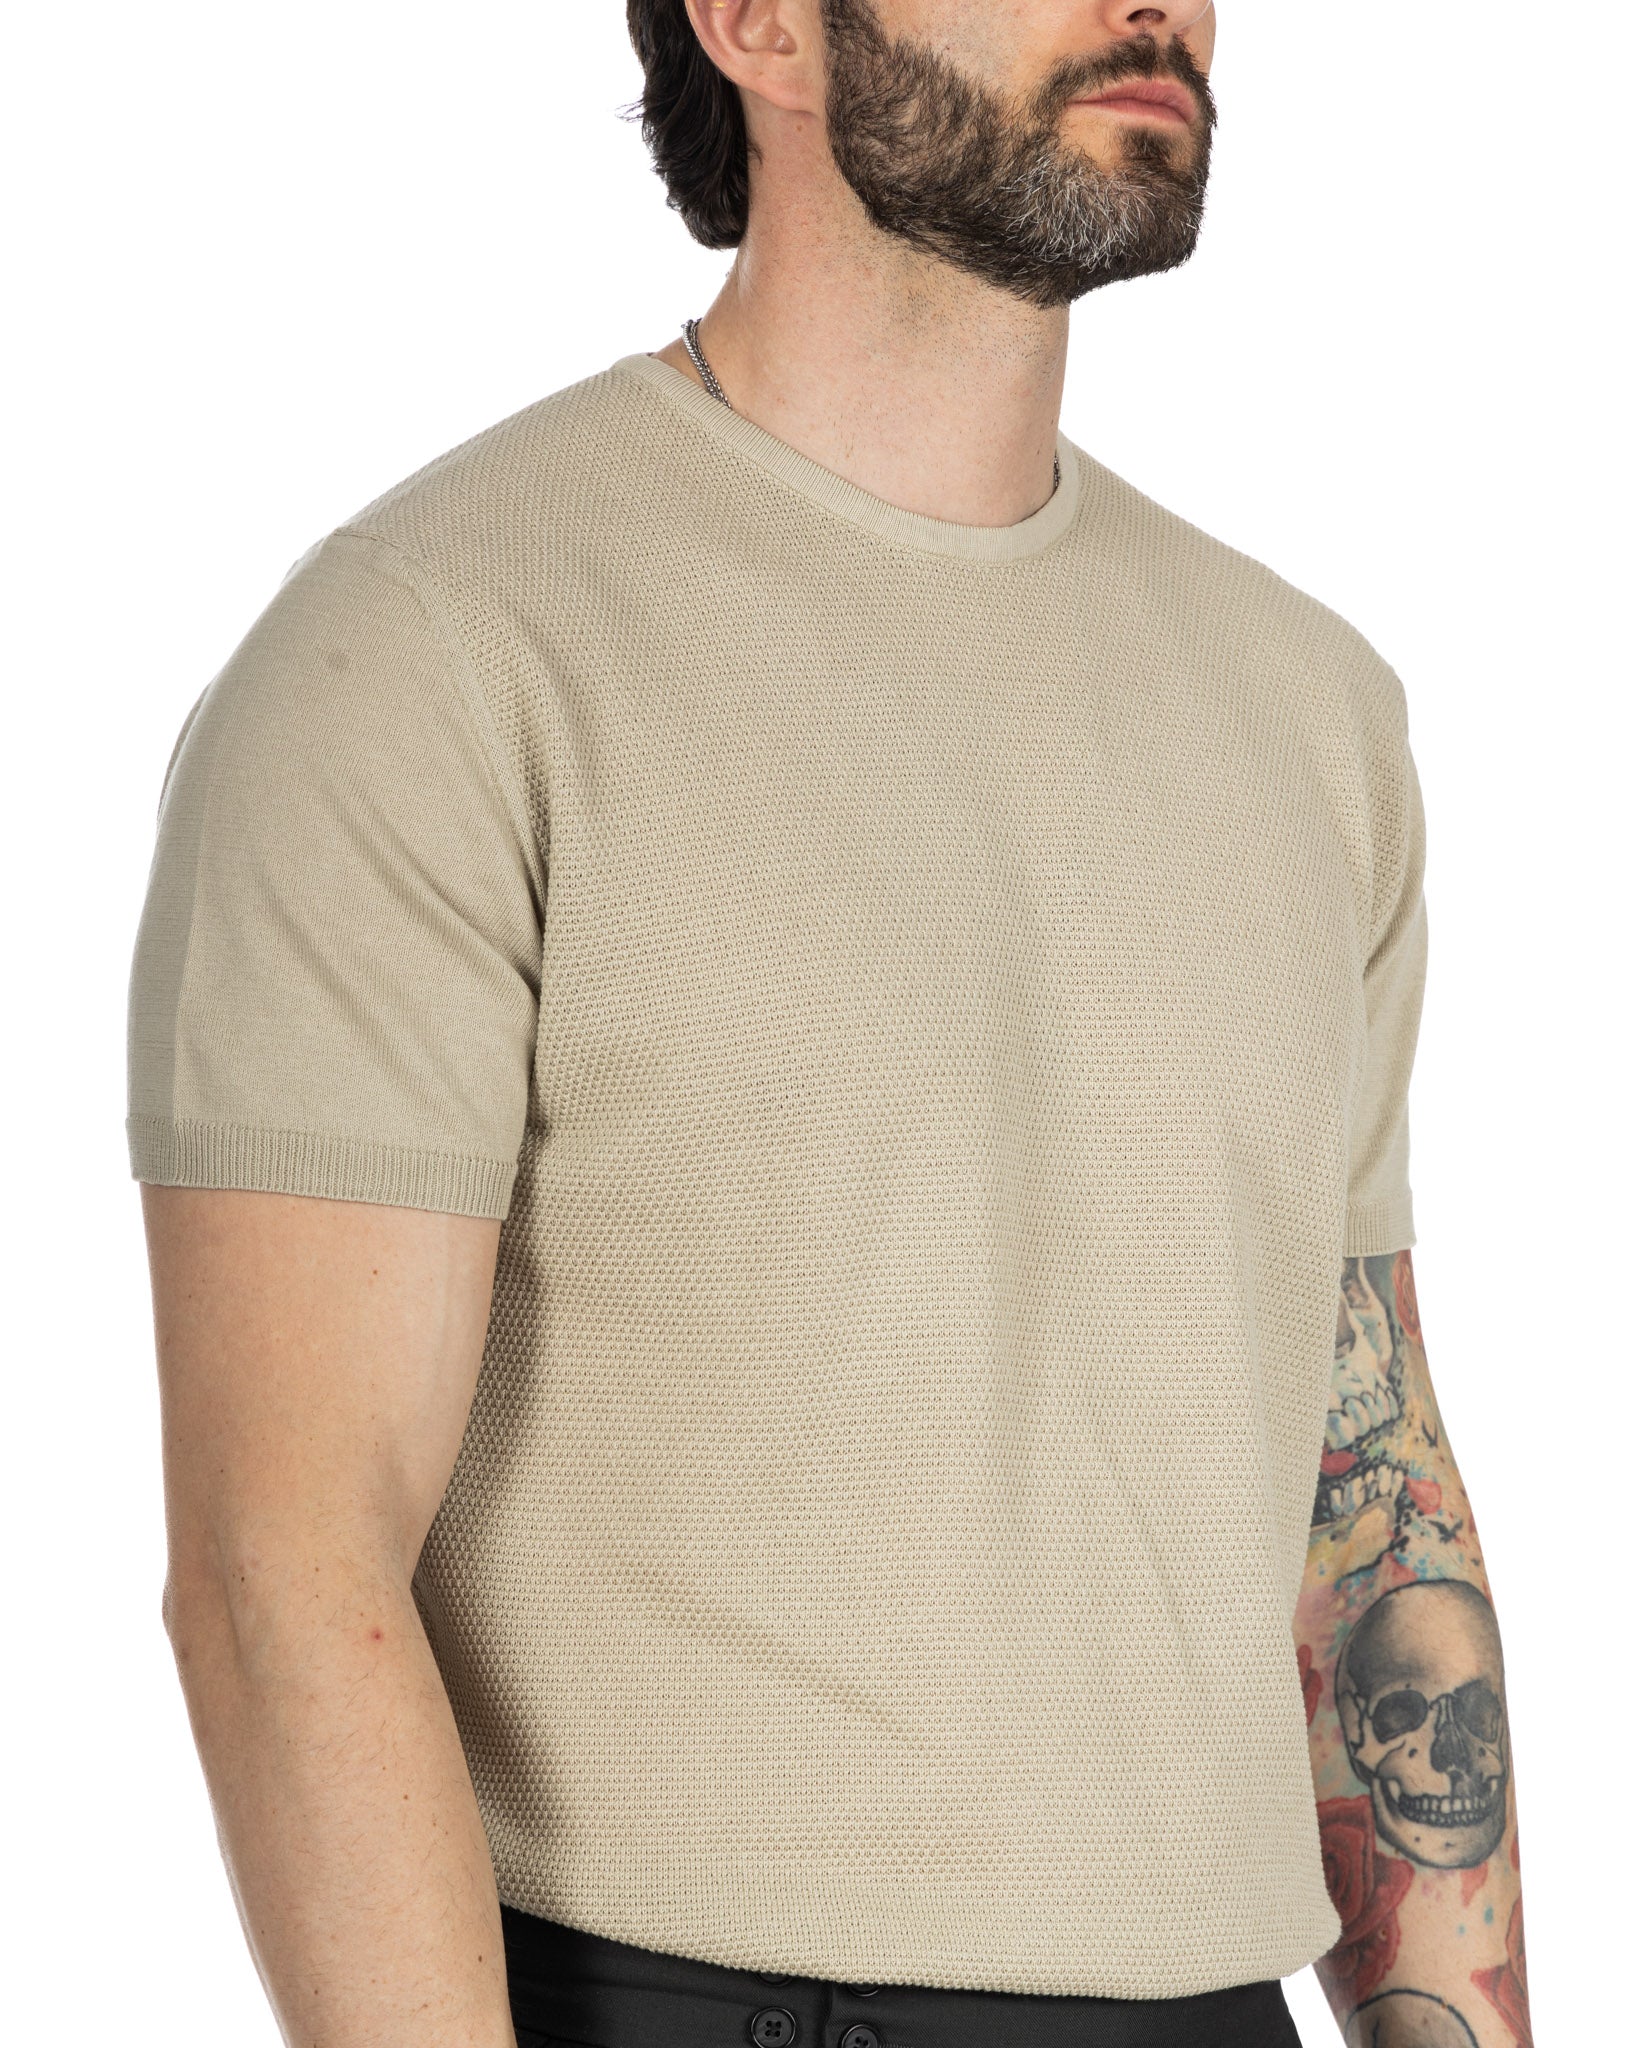 Lorenzo - beige jacquard knit t-shirt